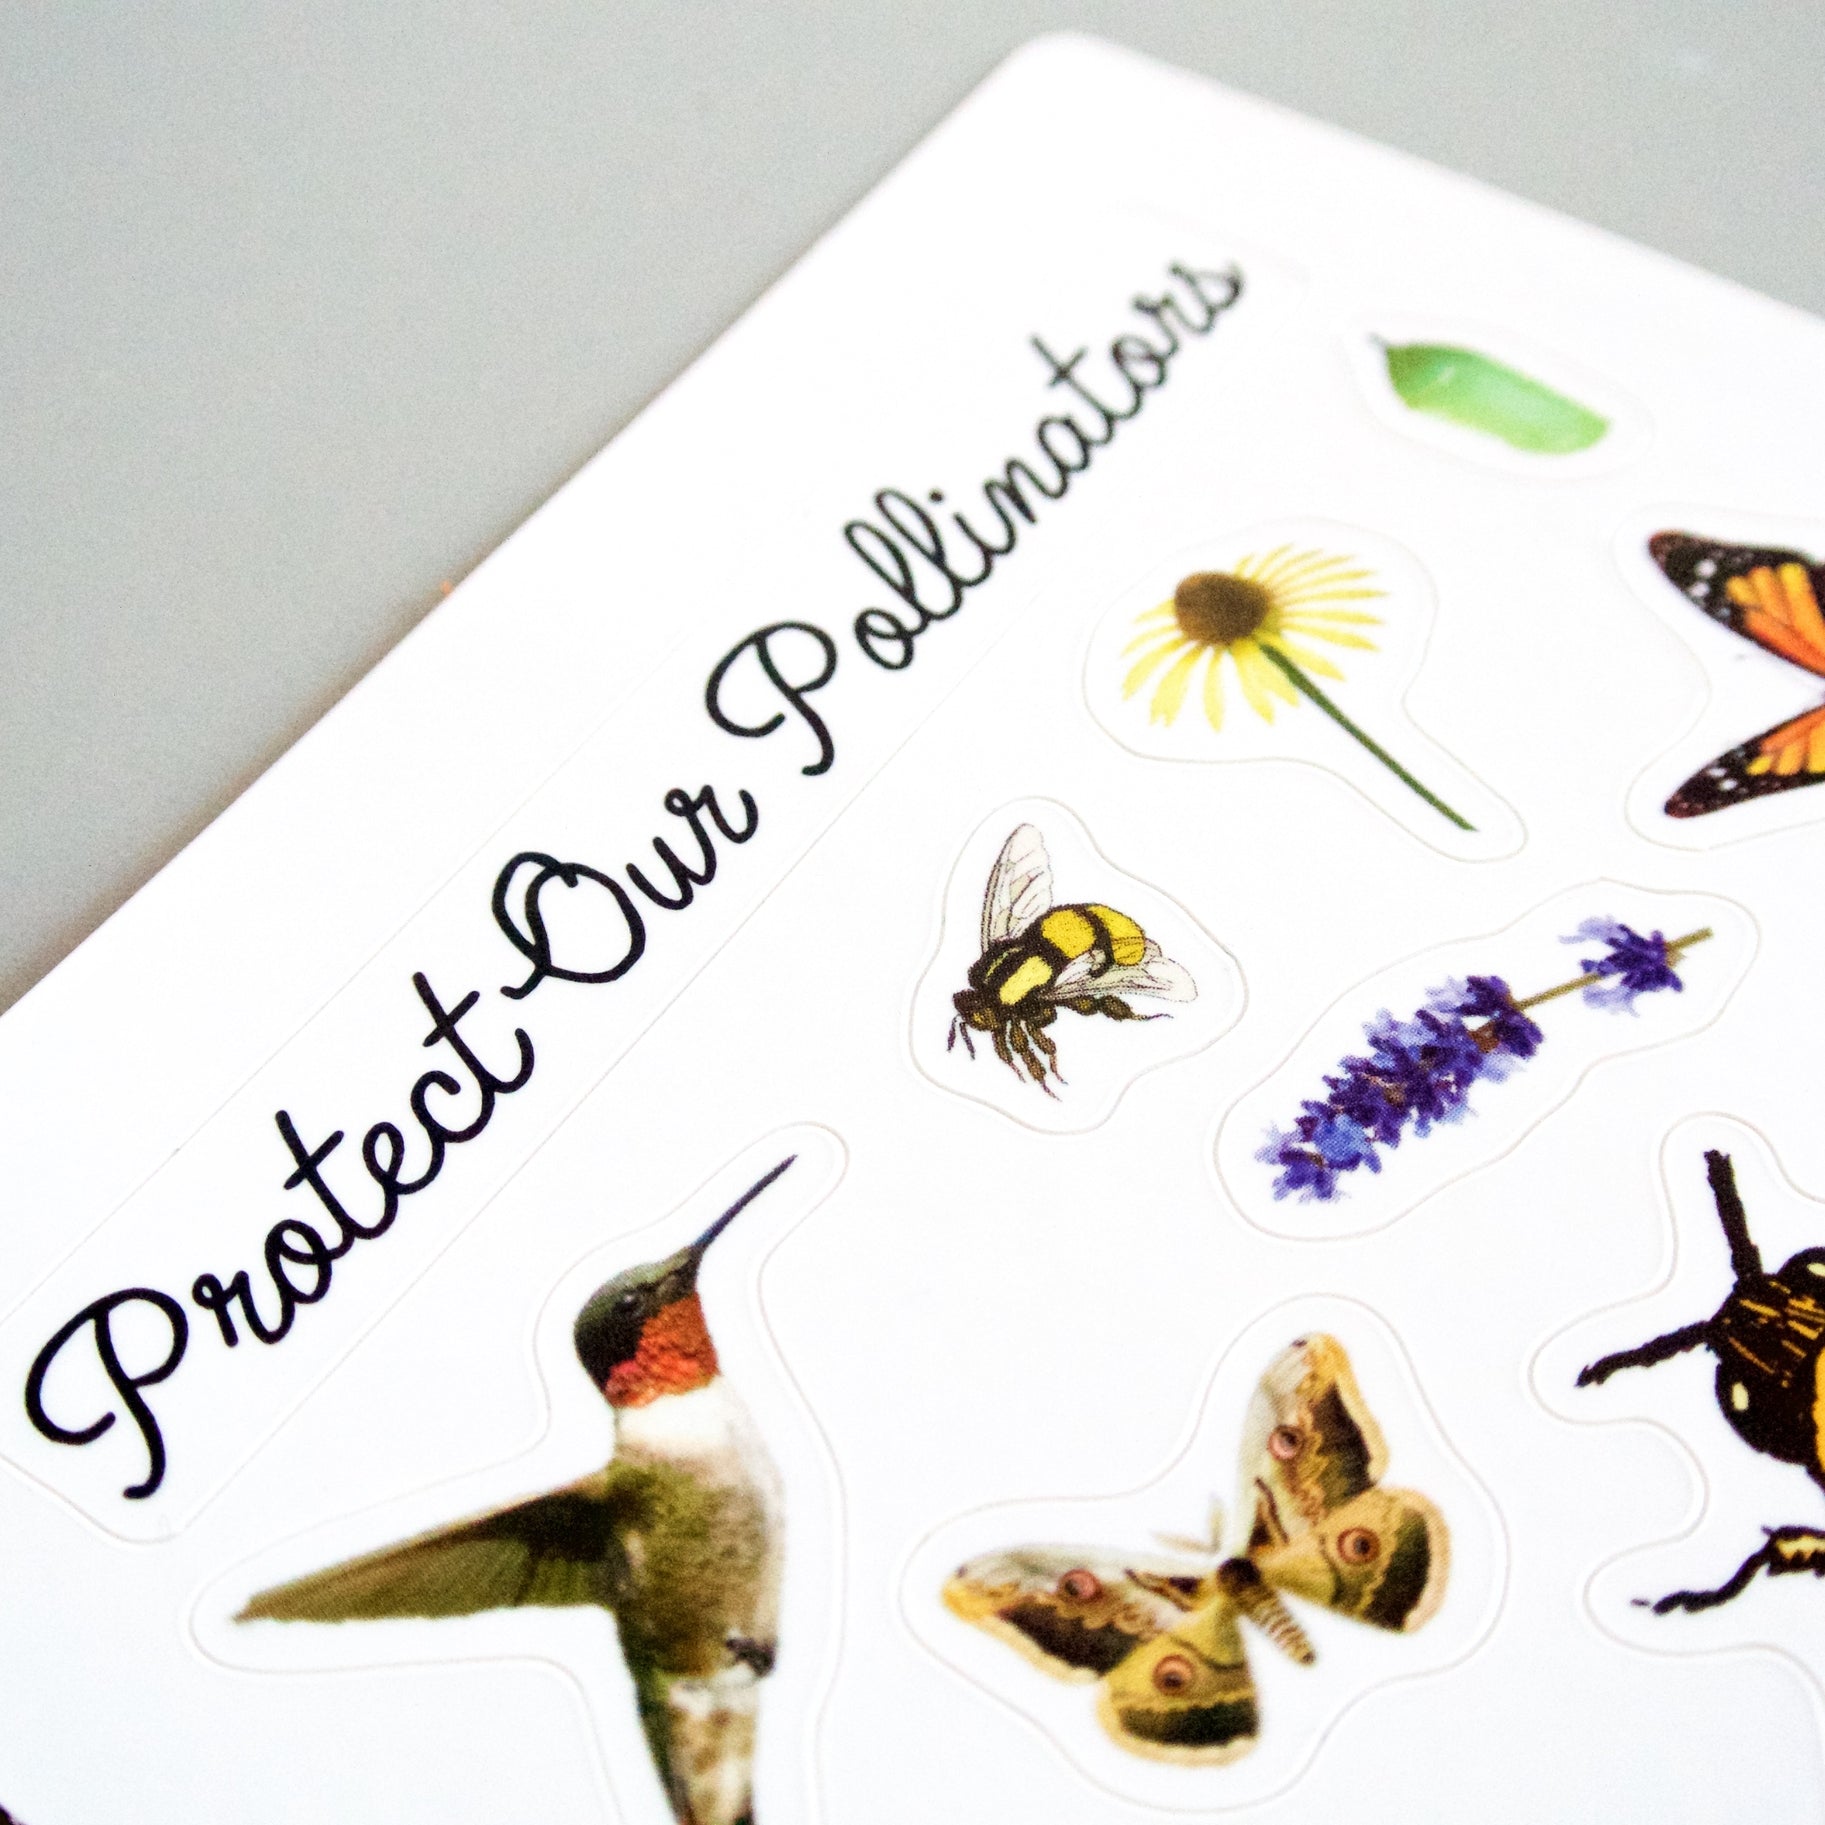 Pollinator Pride Patch & Sticker Kit